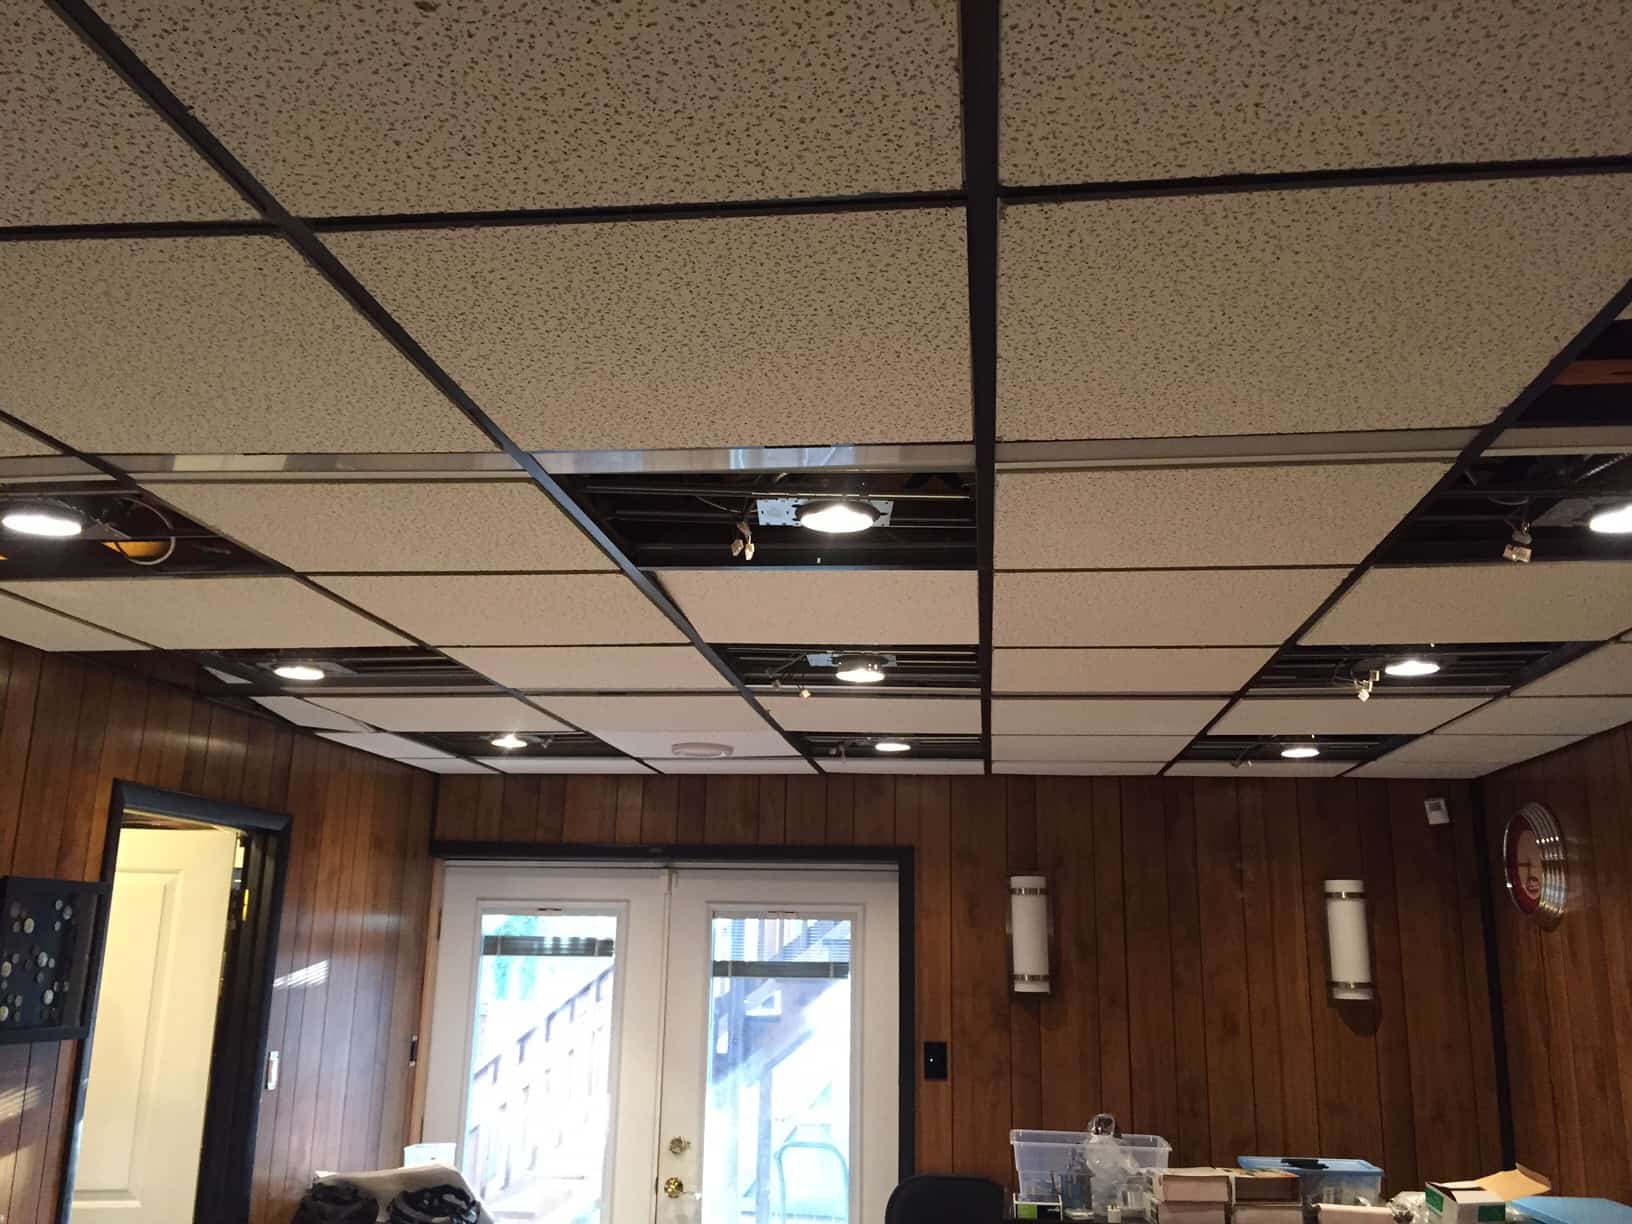 Diy Recessed Lighting Installation In A Drop Ceiling Tiles Part 3 Super Nova Adventures - How To Install Recessed Lighting With Drop Ceiling